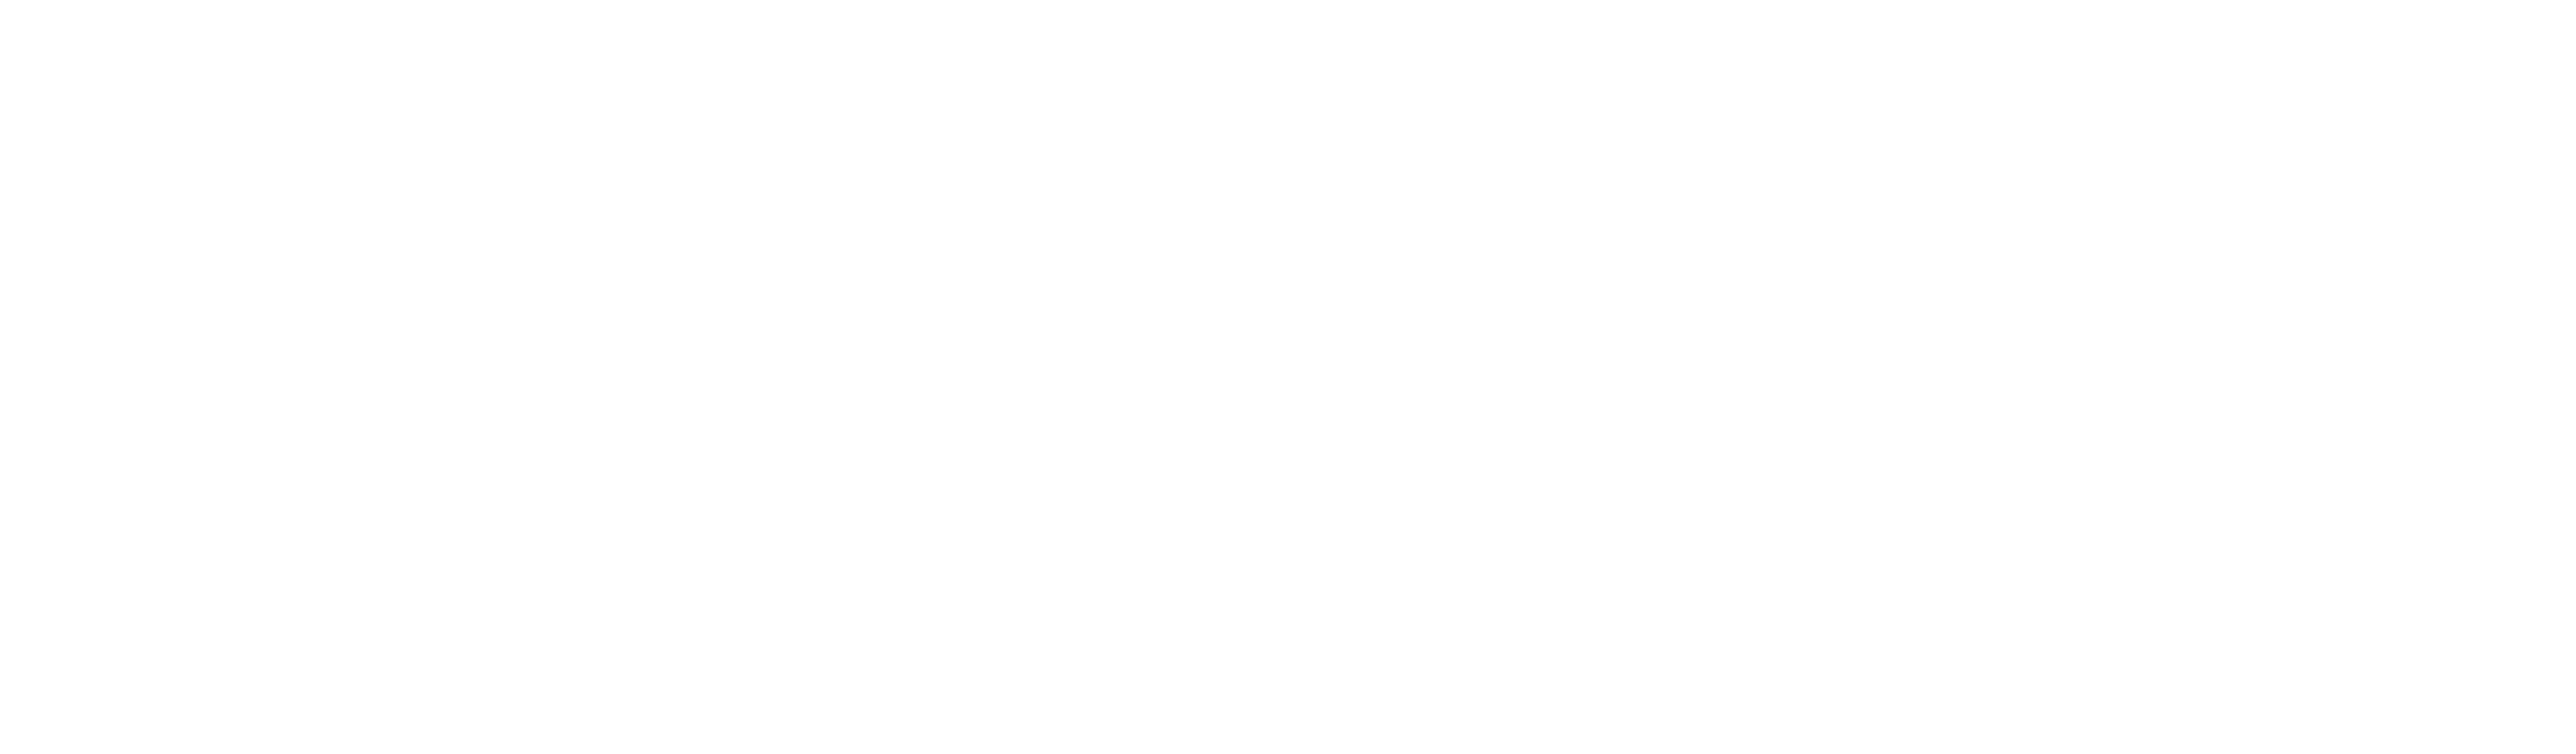 Humanitec logo